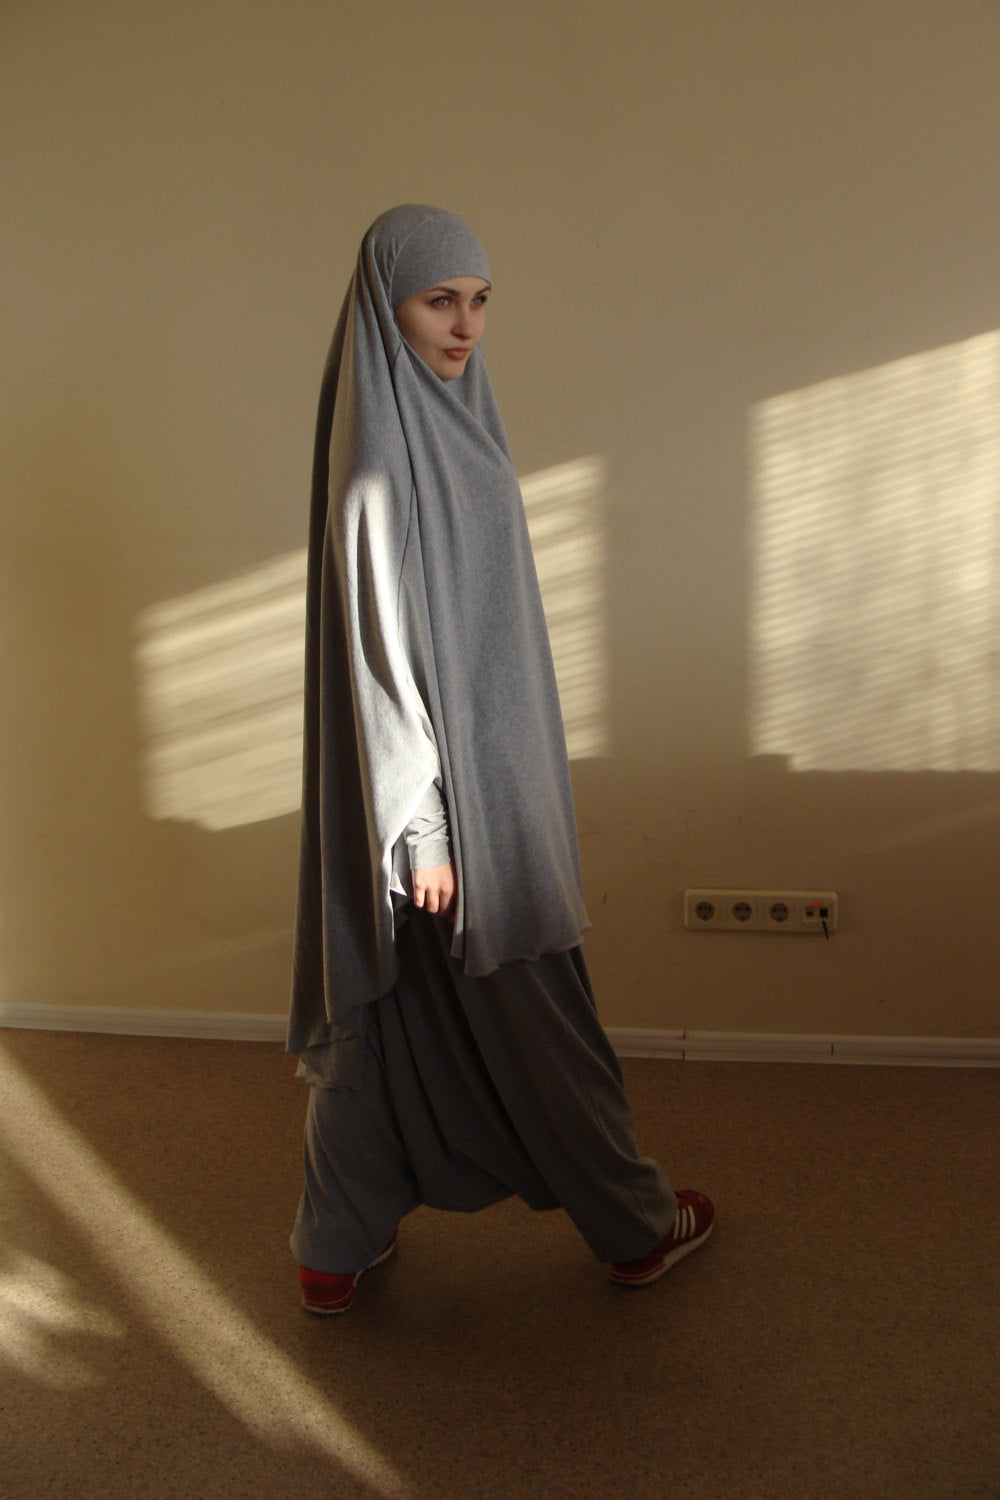 2022 Modest Fashion Trends for Muslim Women